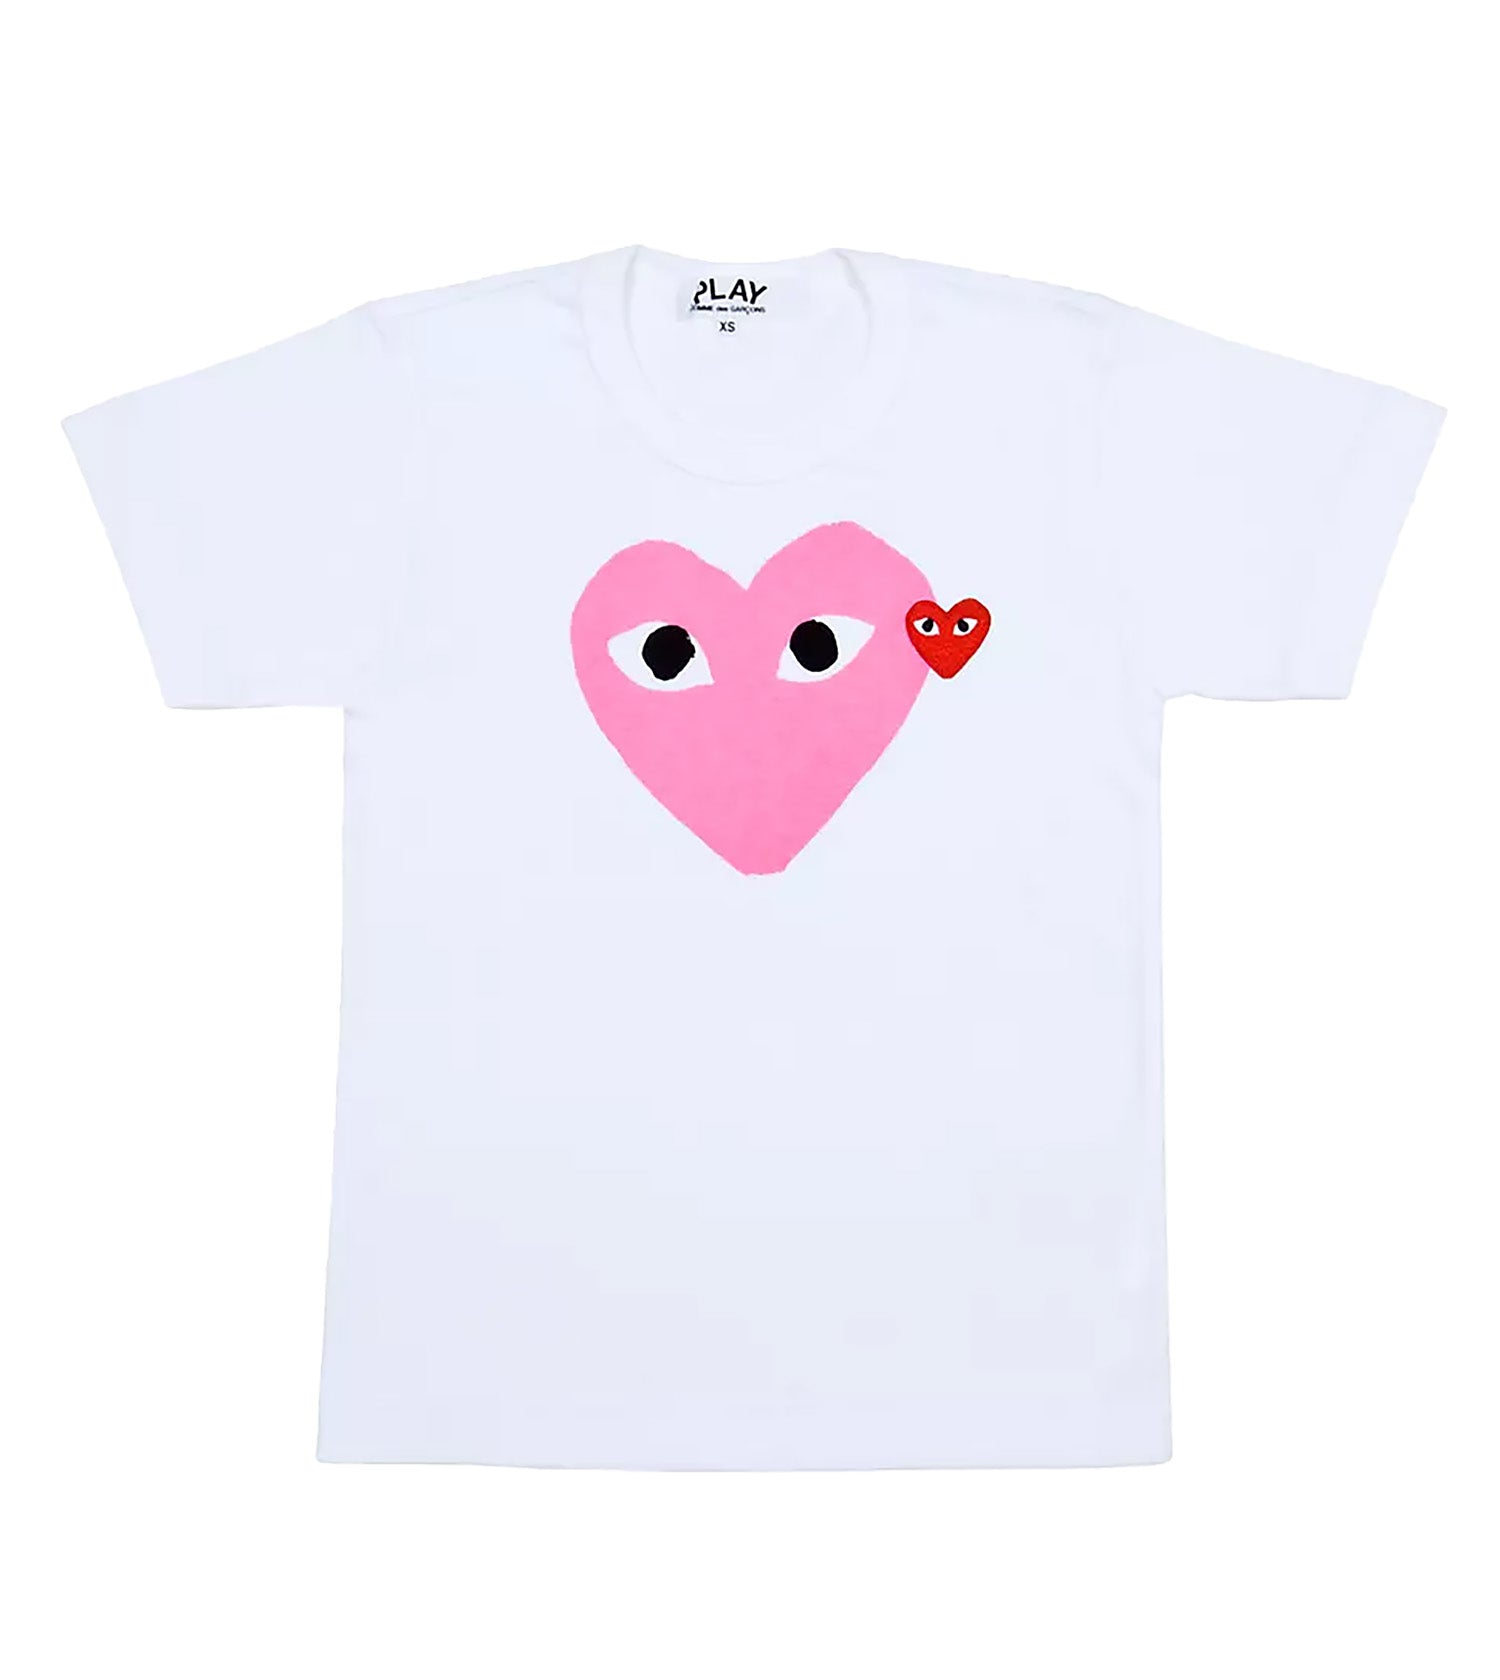 COMME DES GARÇONS PLAY Men's Pink Heart T-Shirt, in White